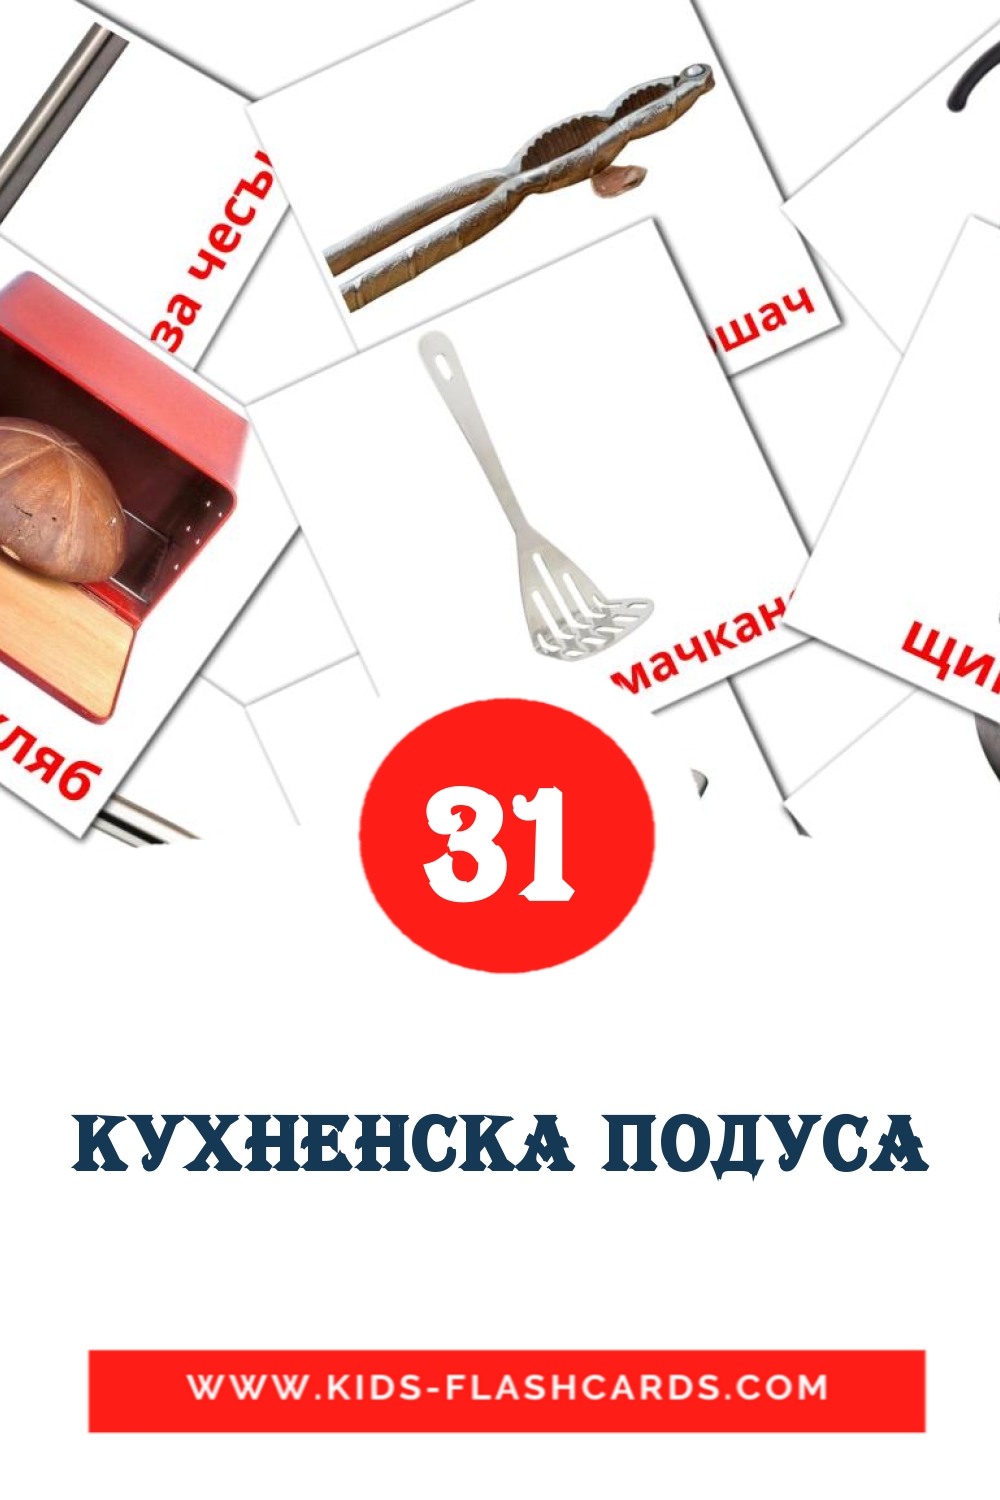 31 Кухненска подуса Picture Cards for Kindergarden in bulgarian